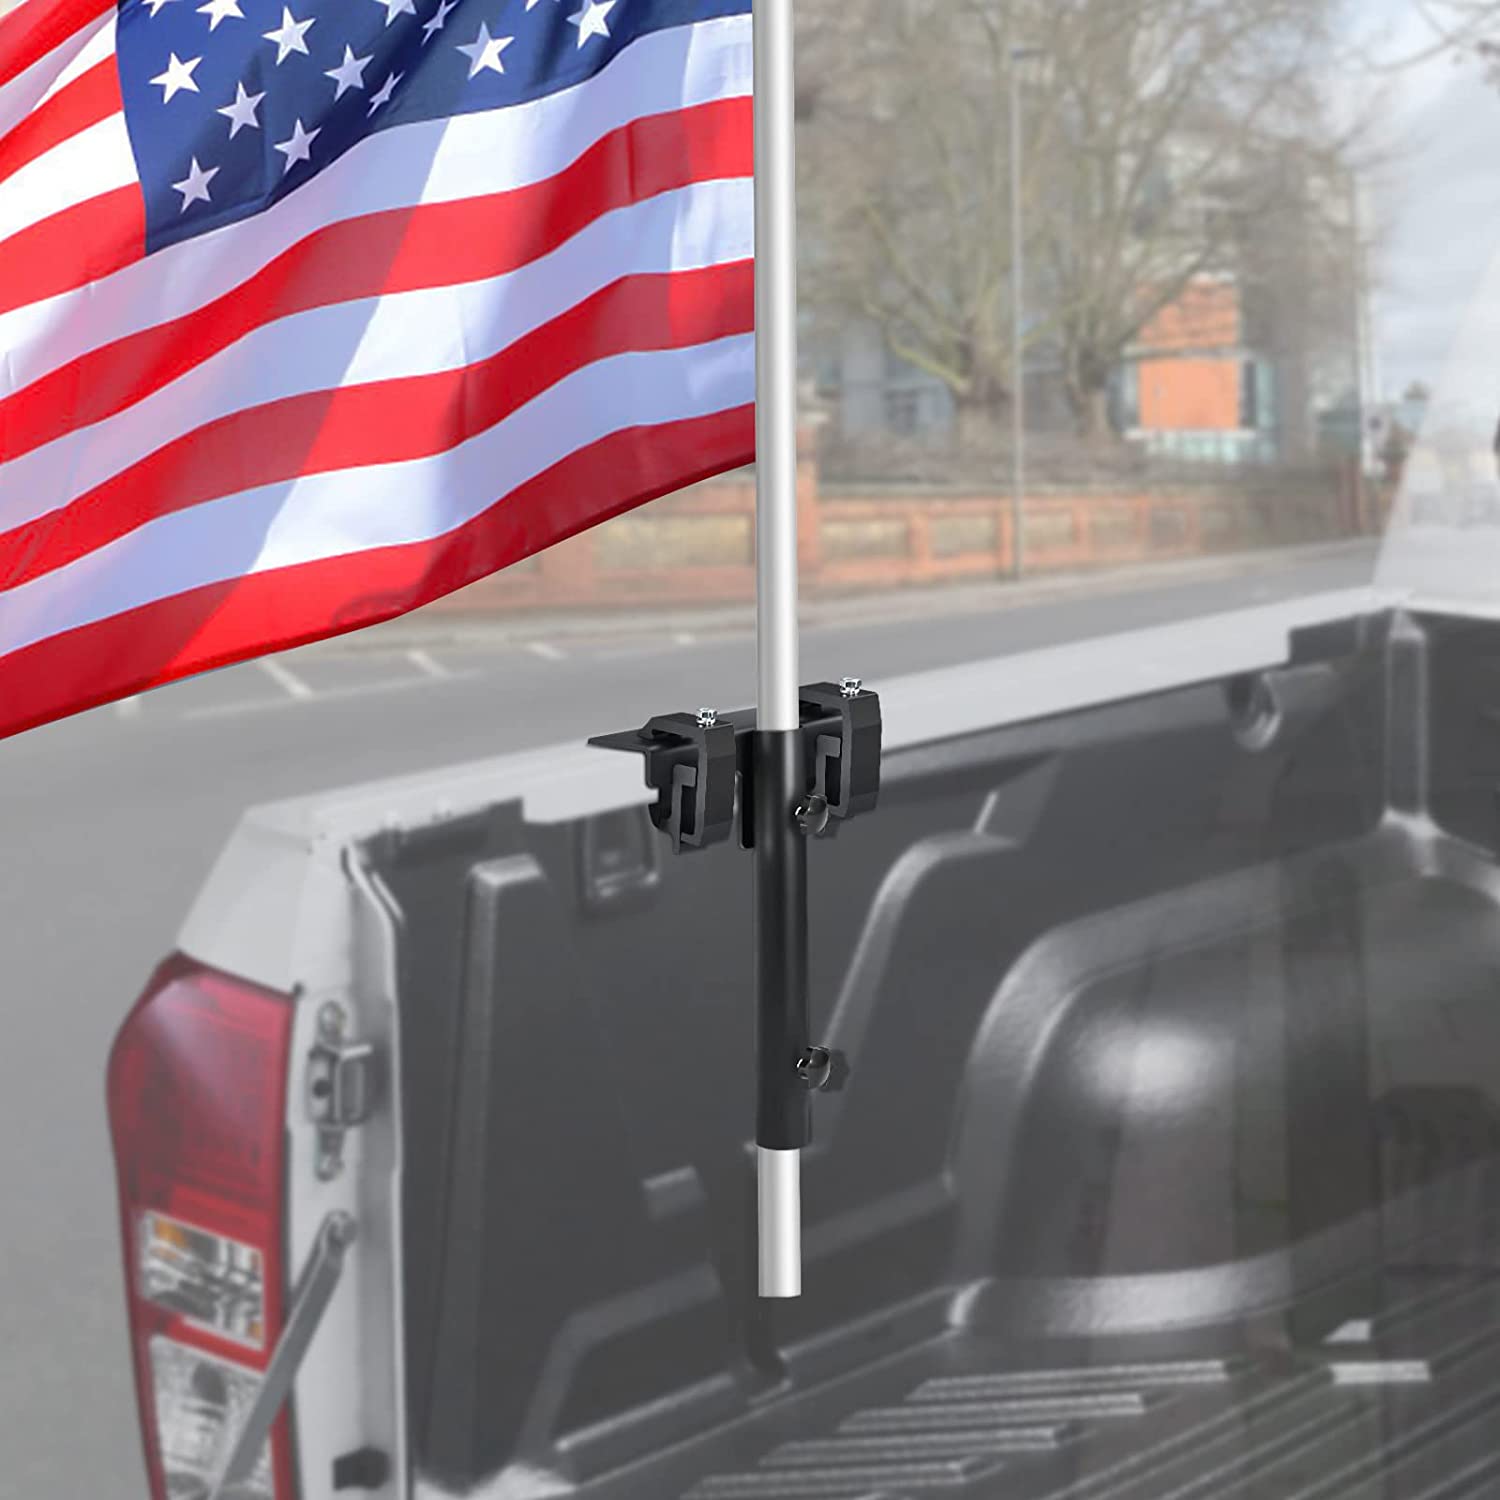 POSTEK No Drilling Side Flag Pole Mount Kit for Truck Bed,Universal Black Flagpole Holder Fit Up to 1.5" Pole